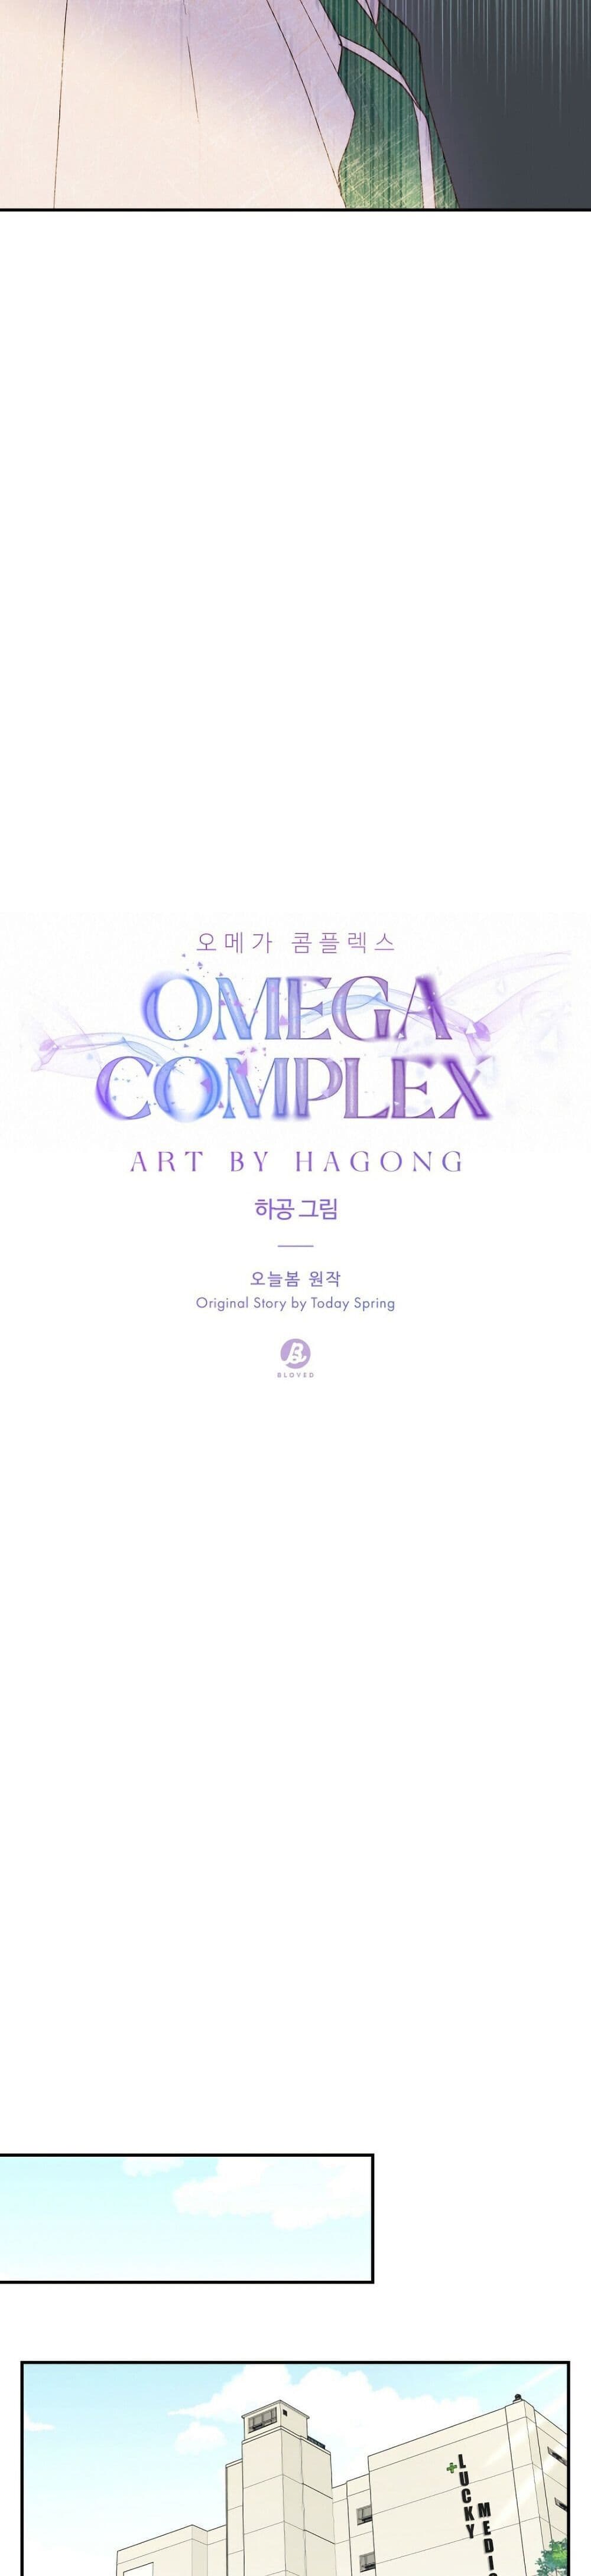 Omega Complex 15-15